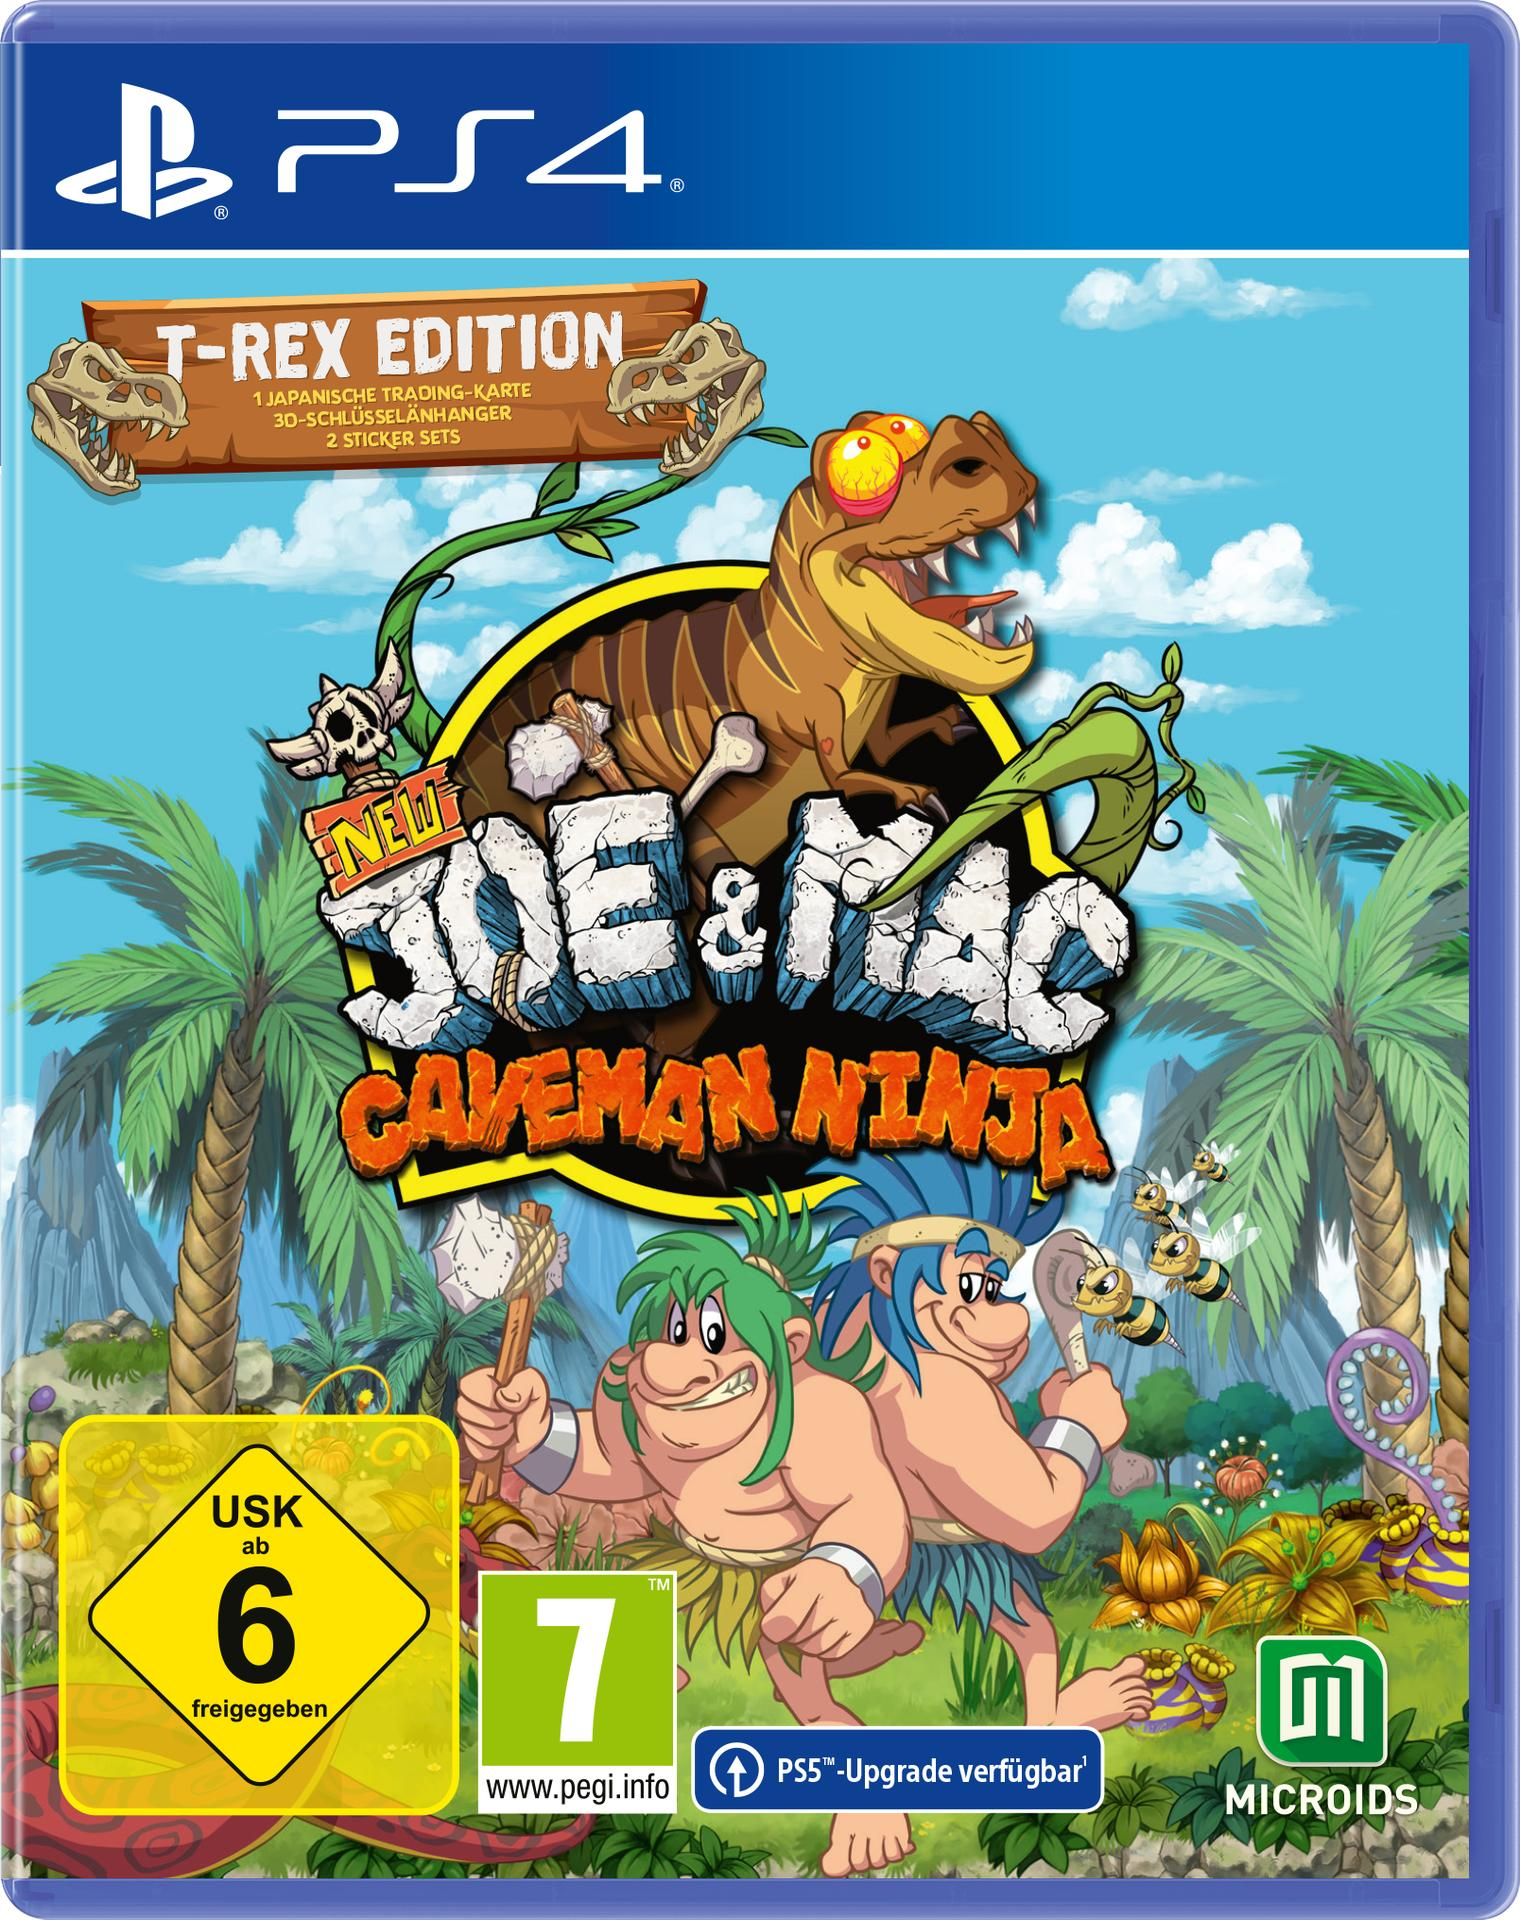 - & Mac: Joe 4] Edition [PlayStation - New T-Rex Caveman Ninja